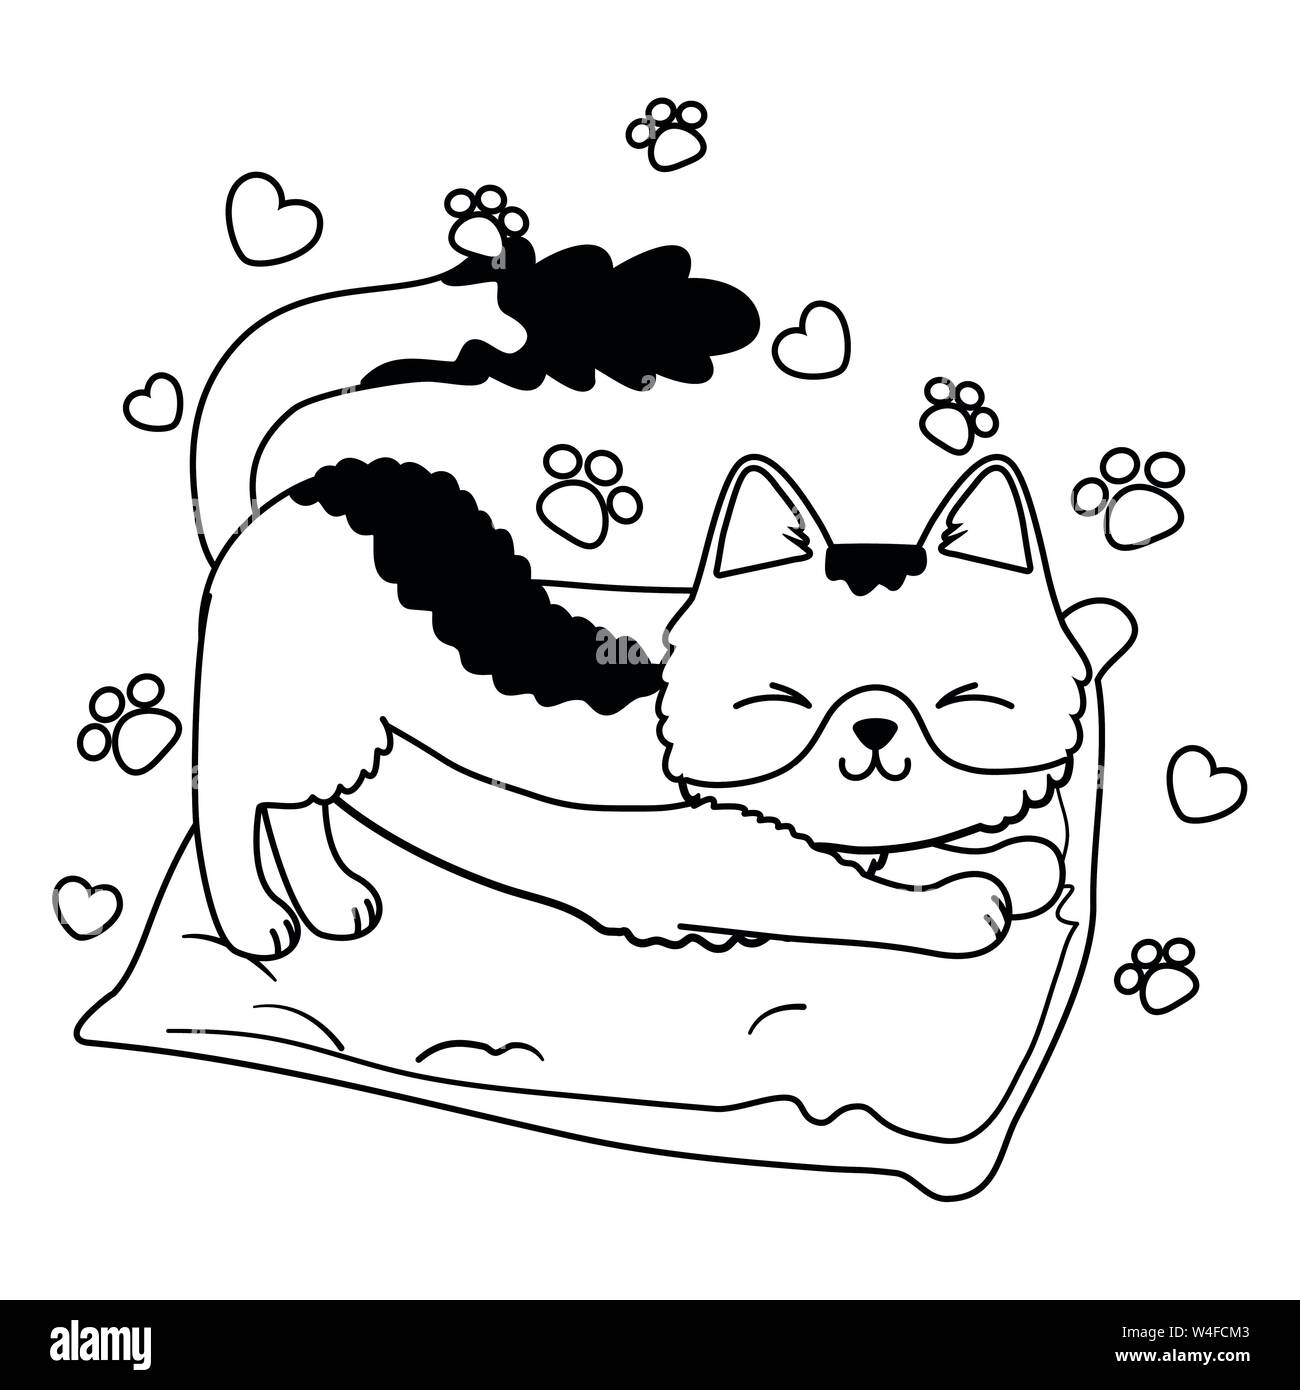 Premium Vector  Cute cat sleeping with love shape cartoon vector icon  illustration animal nature icon isolated